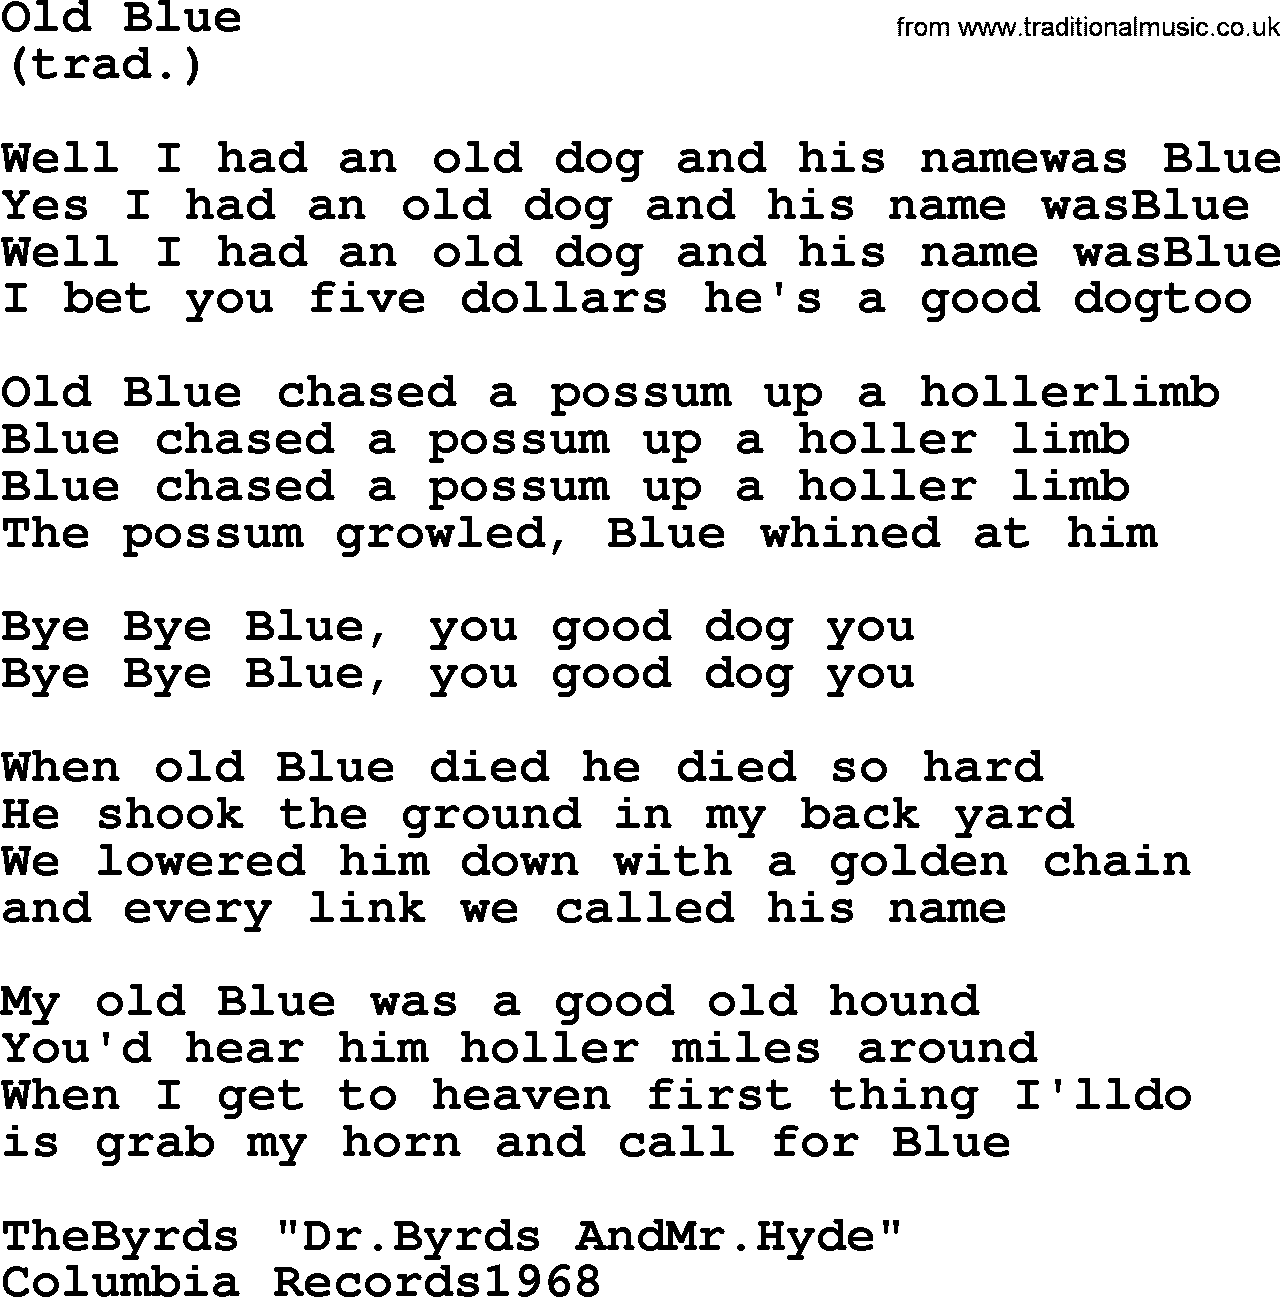 The Byrds song Old Blue, lyrics